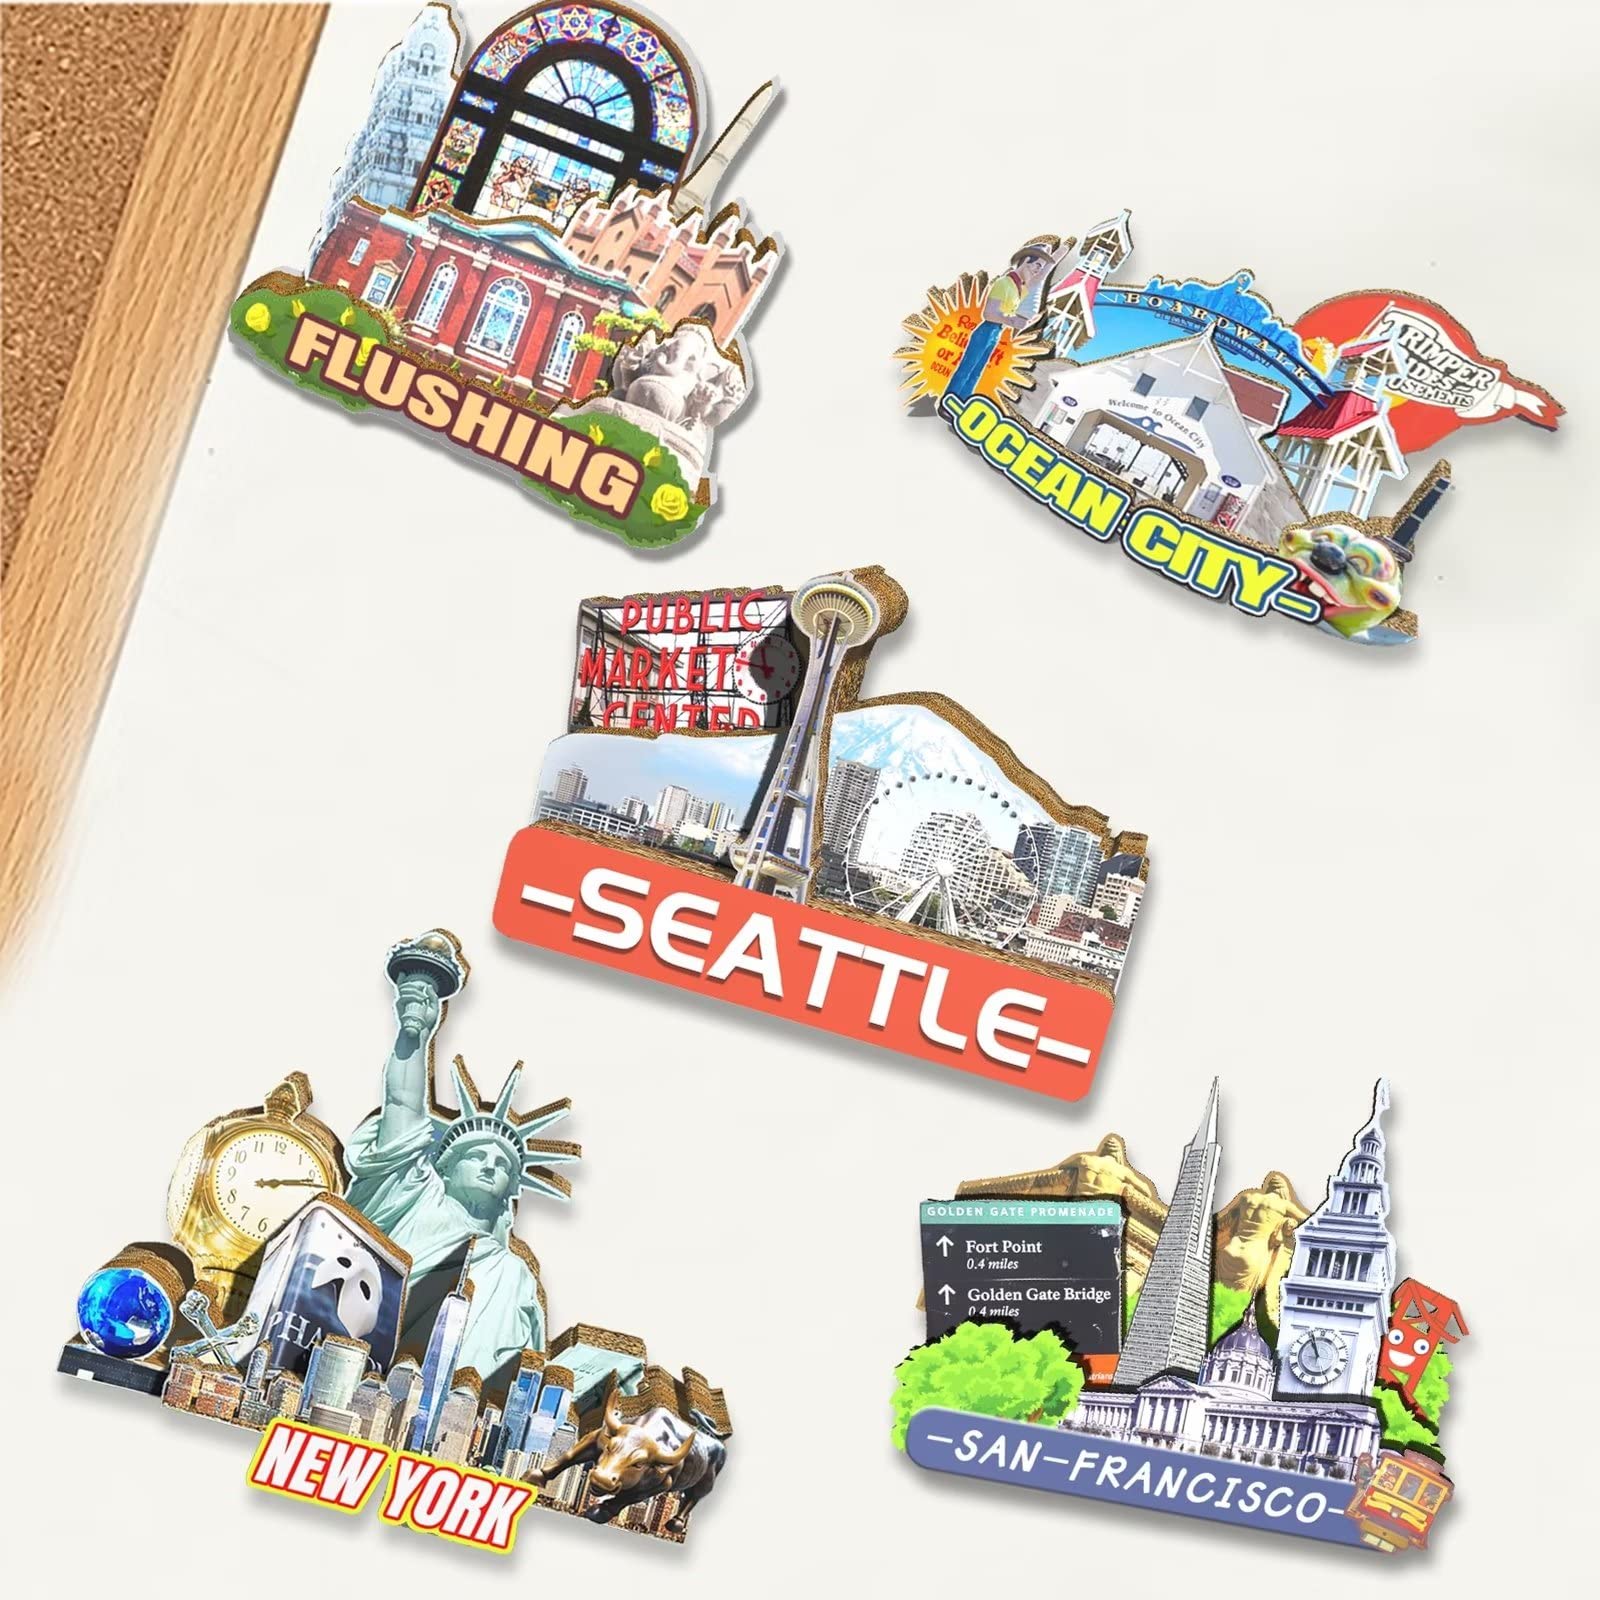 USA Seattle Magnet Fridge Magnet Wooden 3D Landmarks Travel Collectible Souvenirs Decoration Handmade